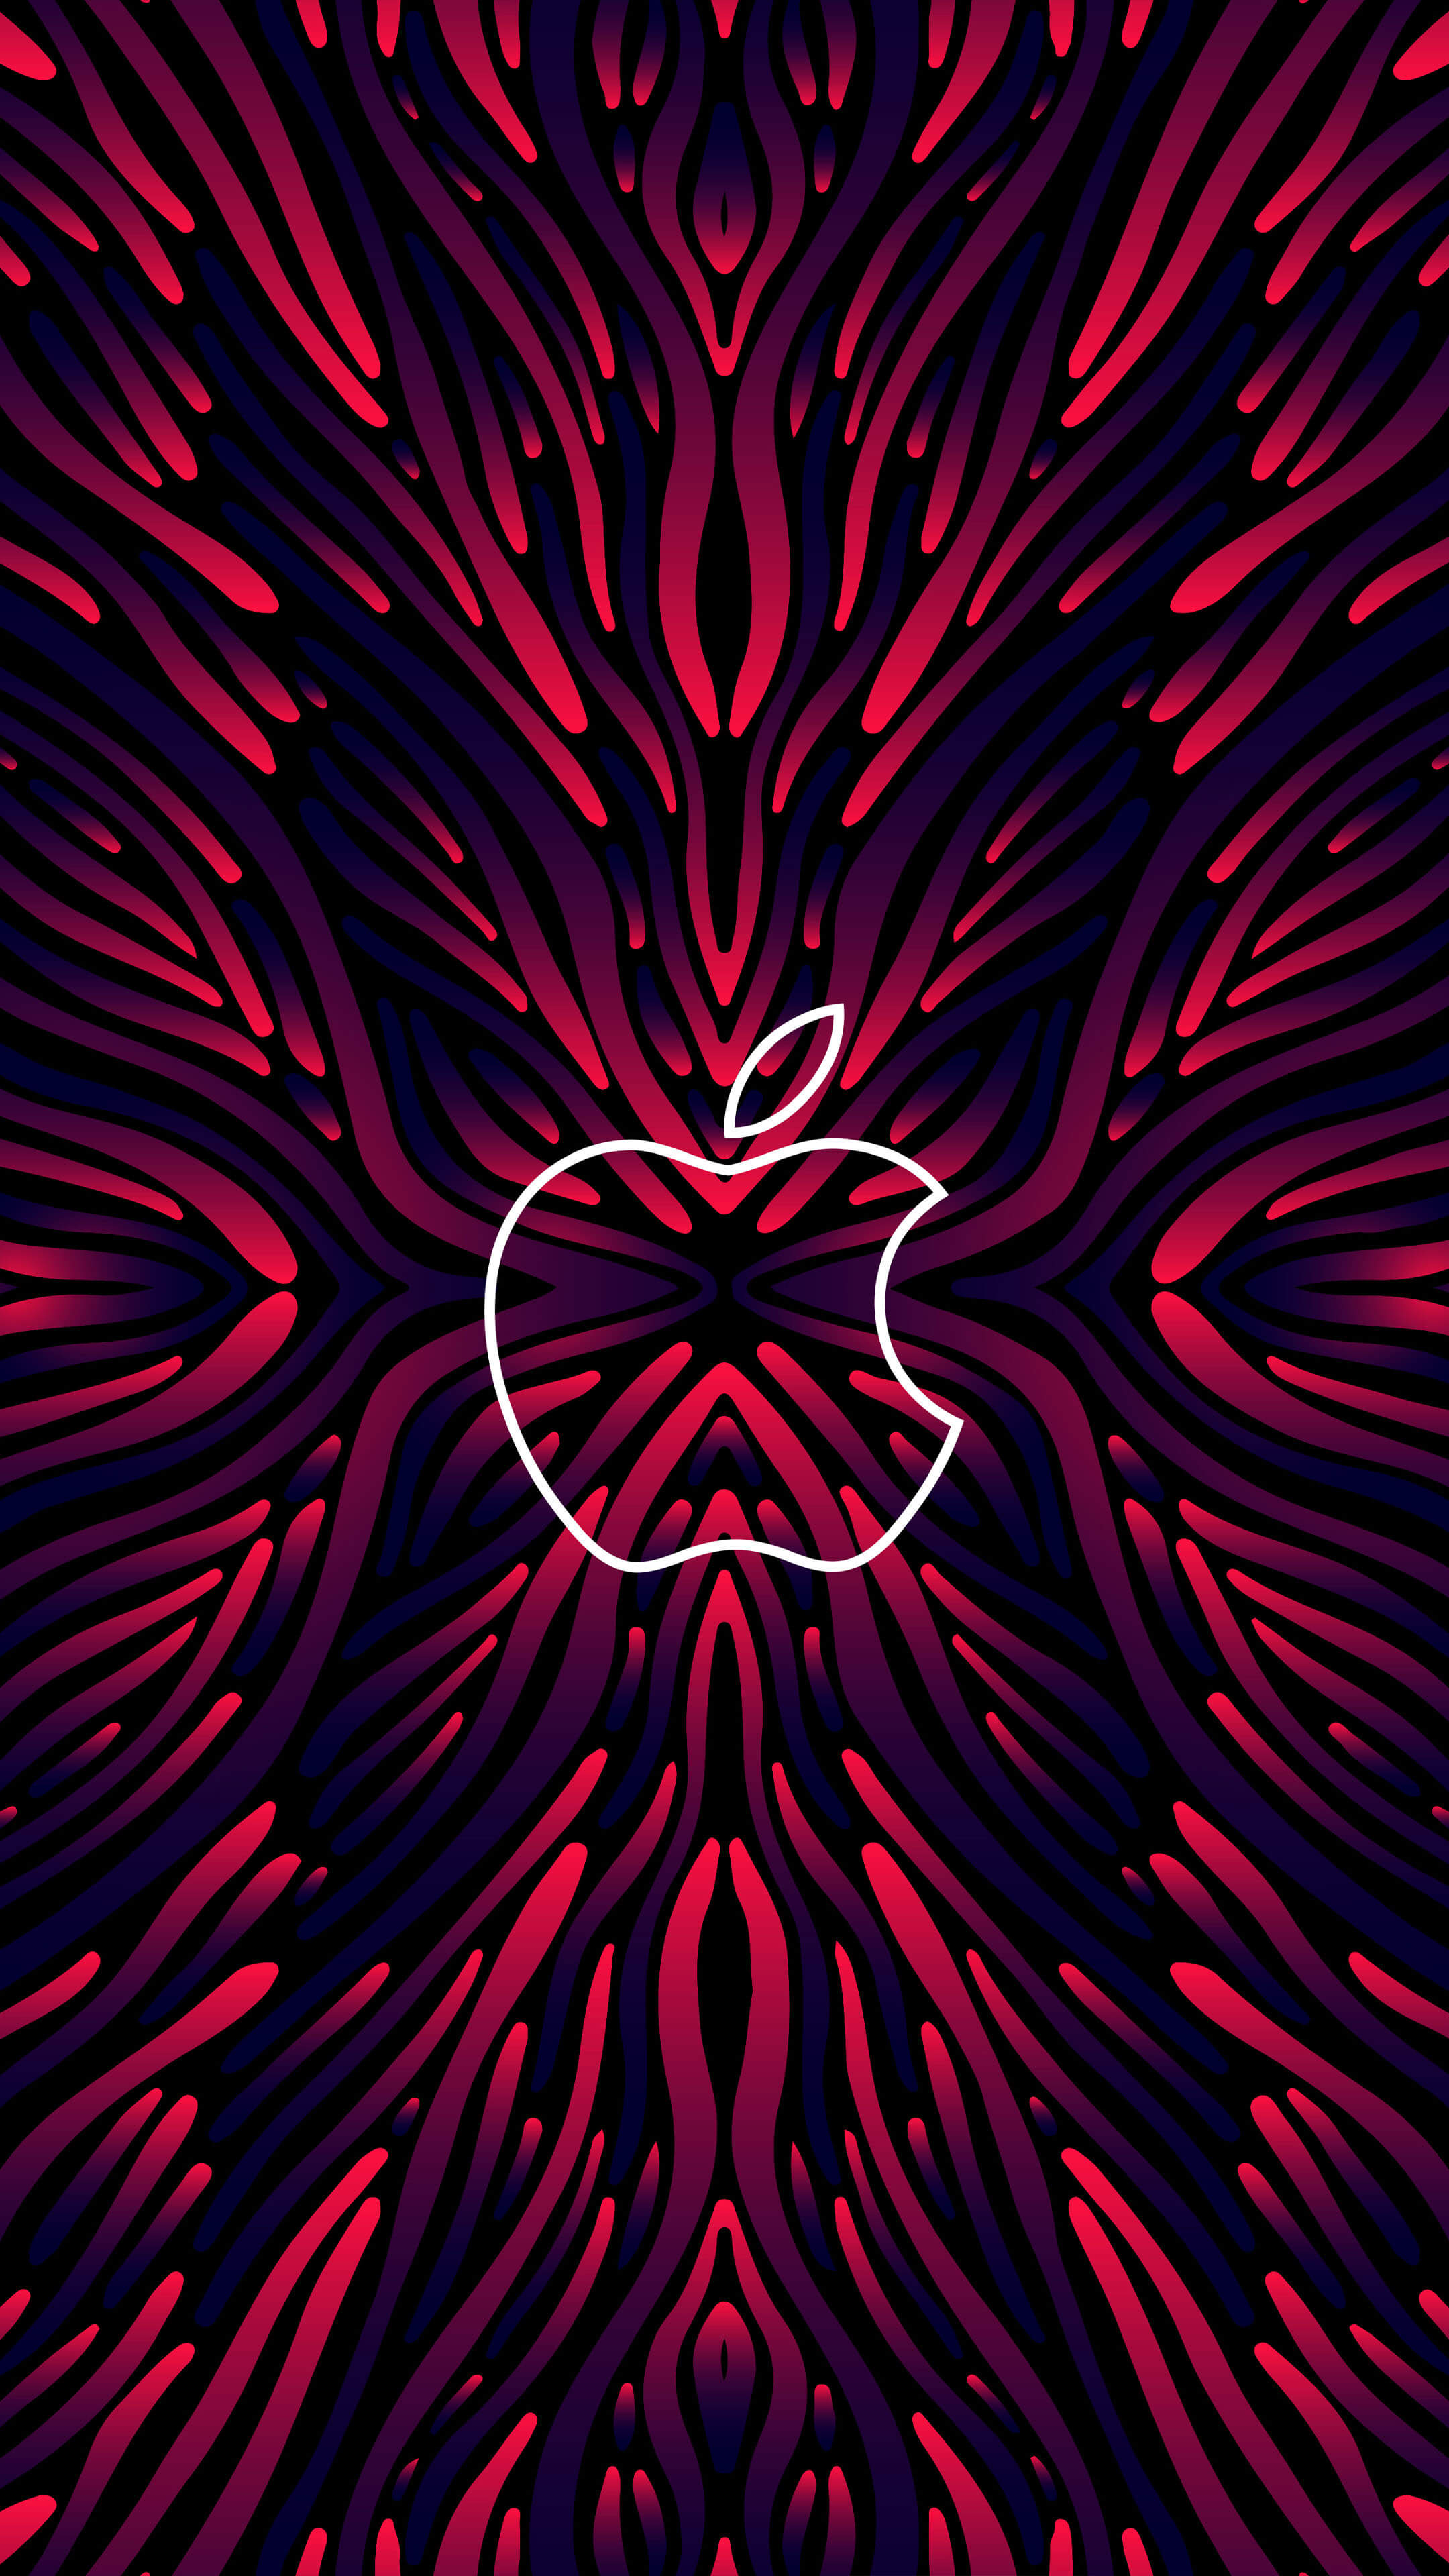 60 Apple wallpaper iphone ideas | apple wallpaper iphone, apple wallpaper,  apple logo wallpaper